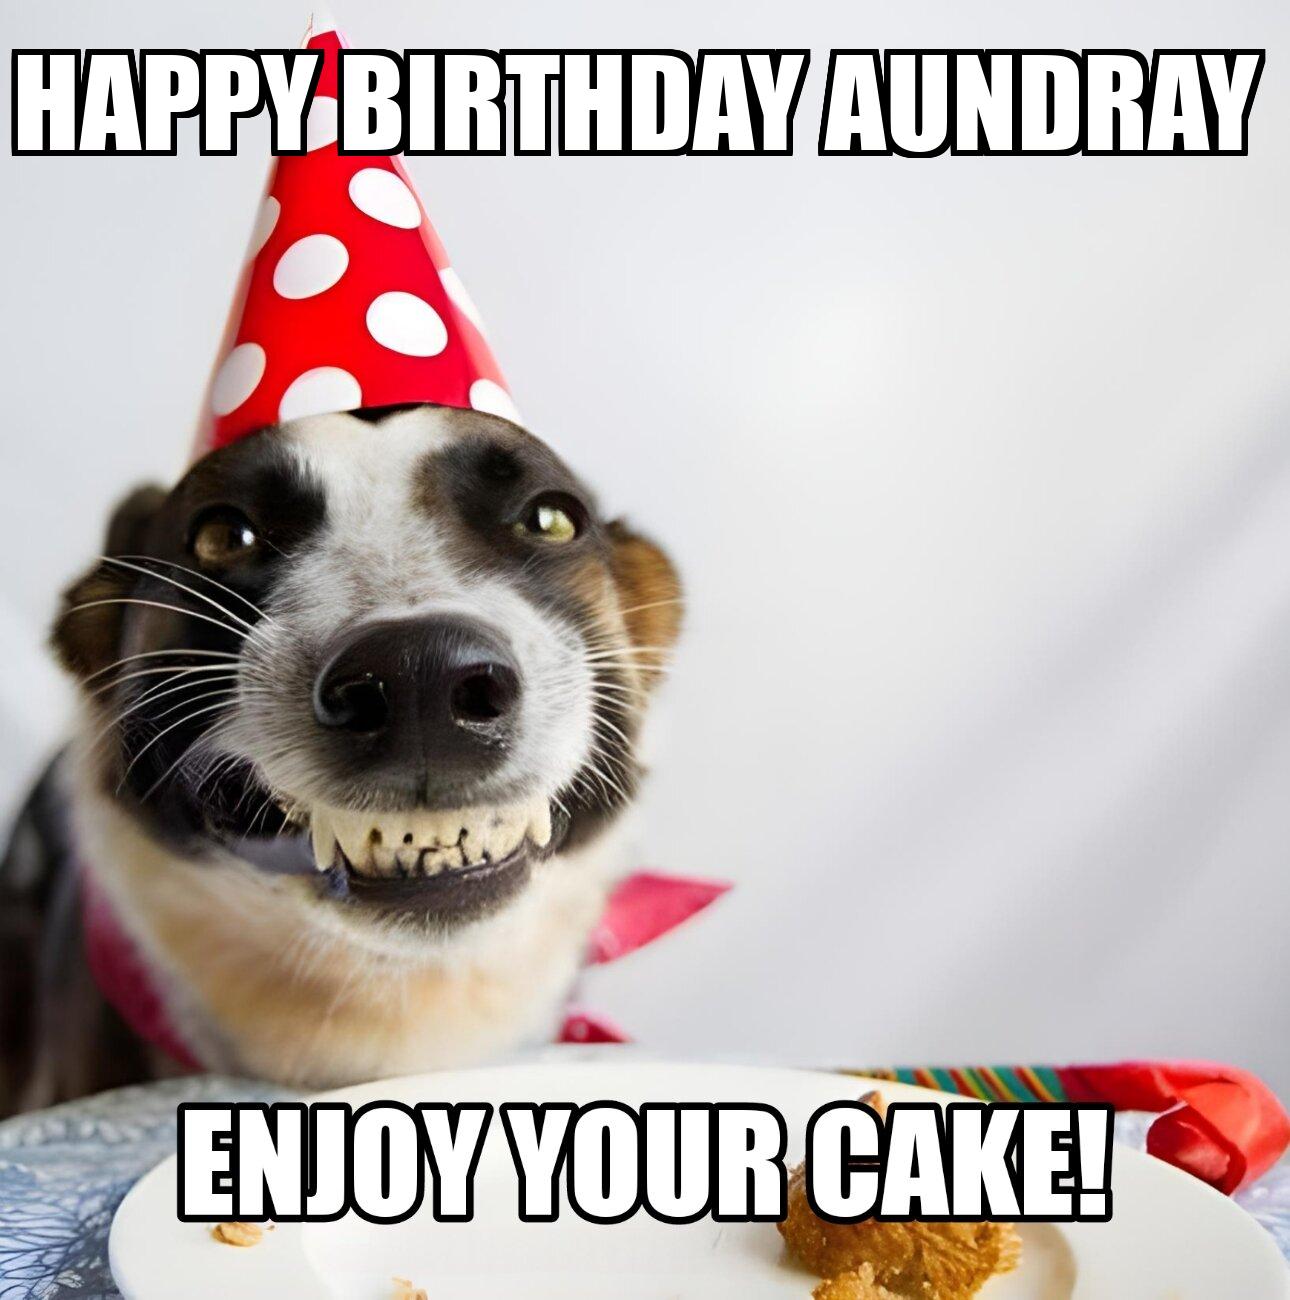 Happy Birthday Aundray Enjoy Your Cake Dog Meme